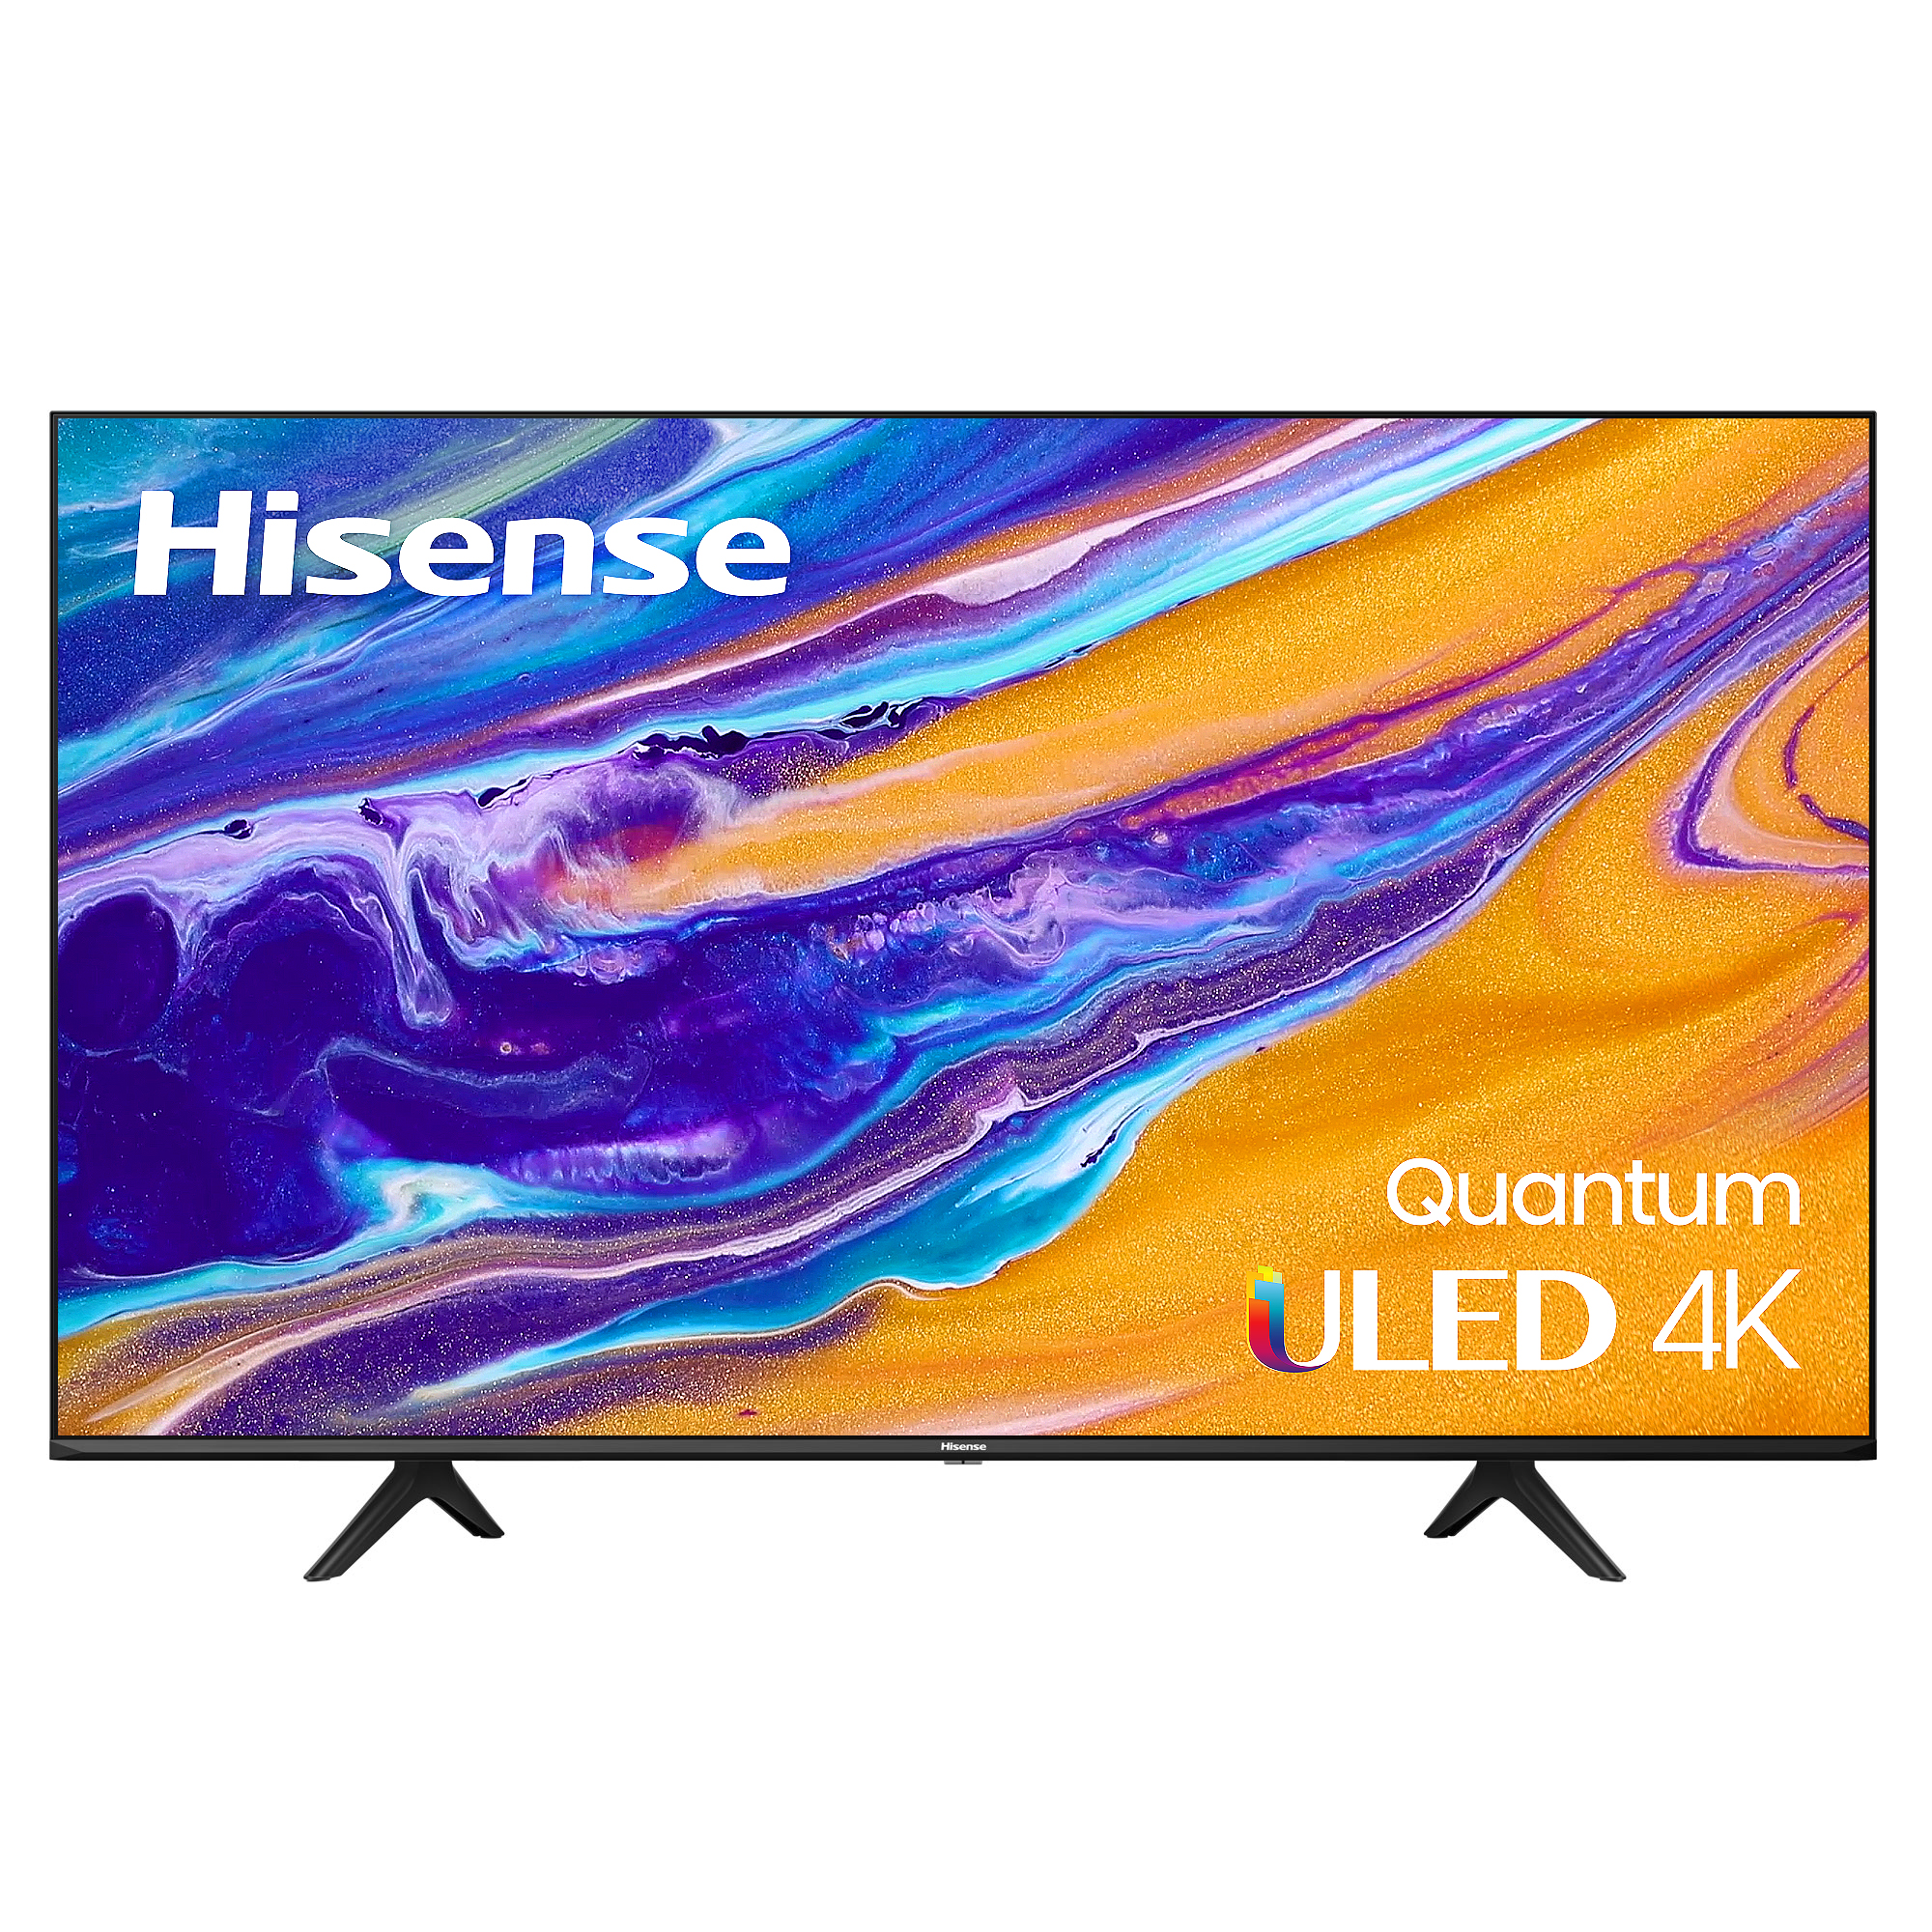 Hisense 75" Quantum 4K ULED Android Smart TV HDR U6G Series 75U6G - image 1 of 16